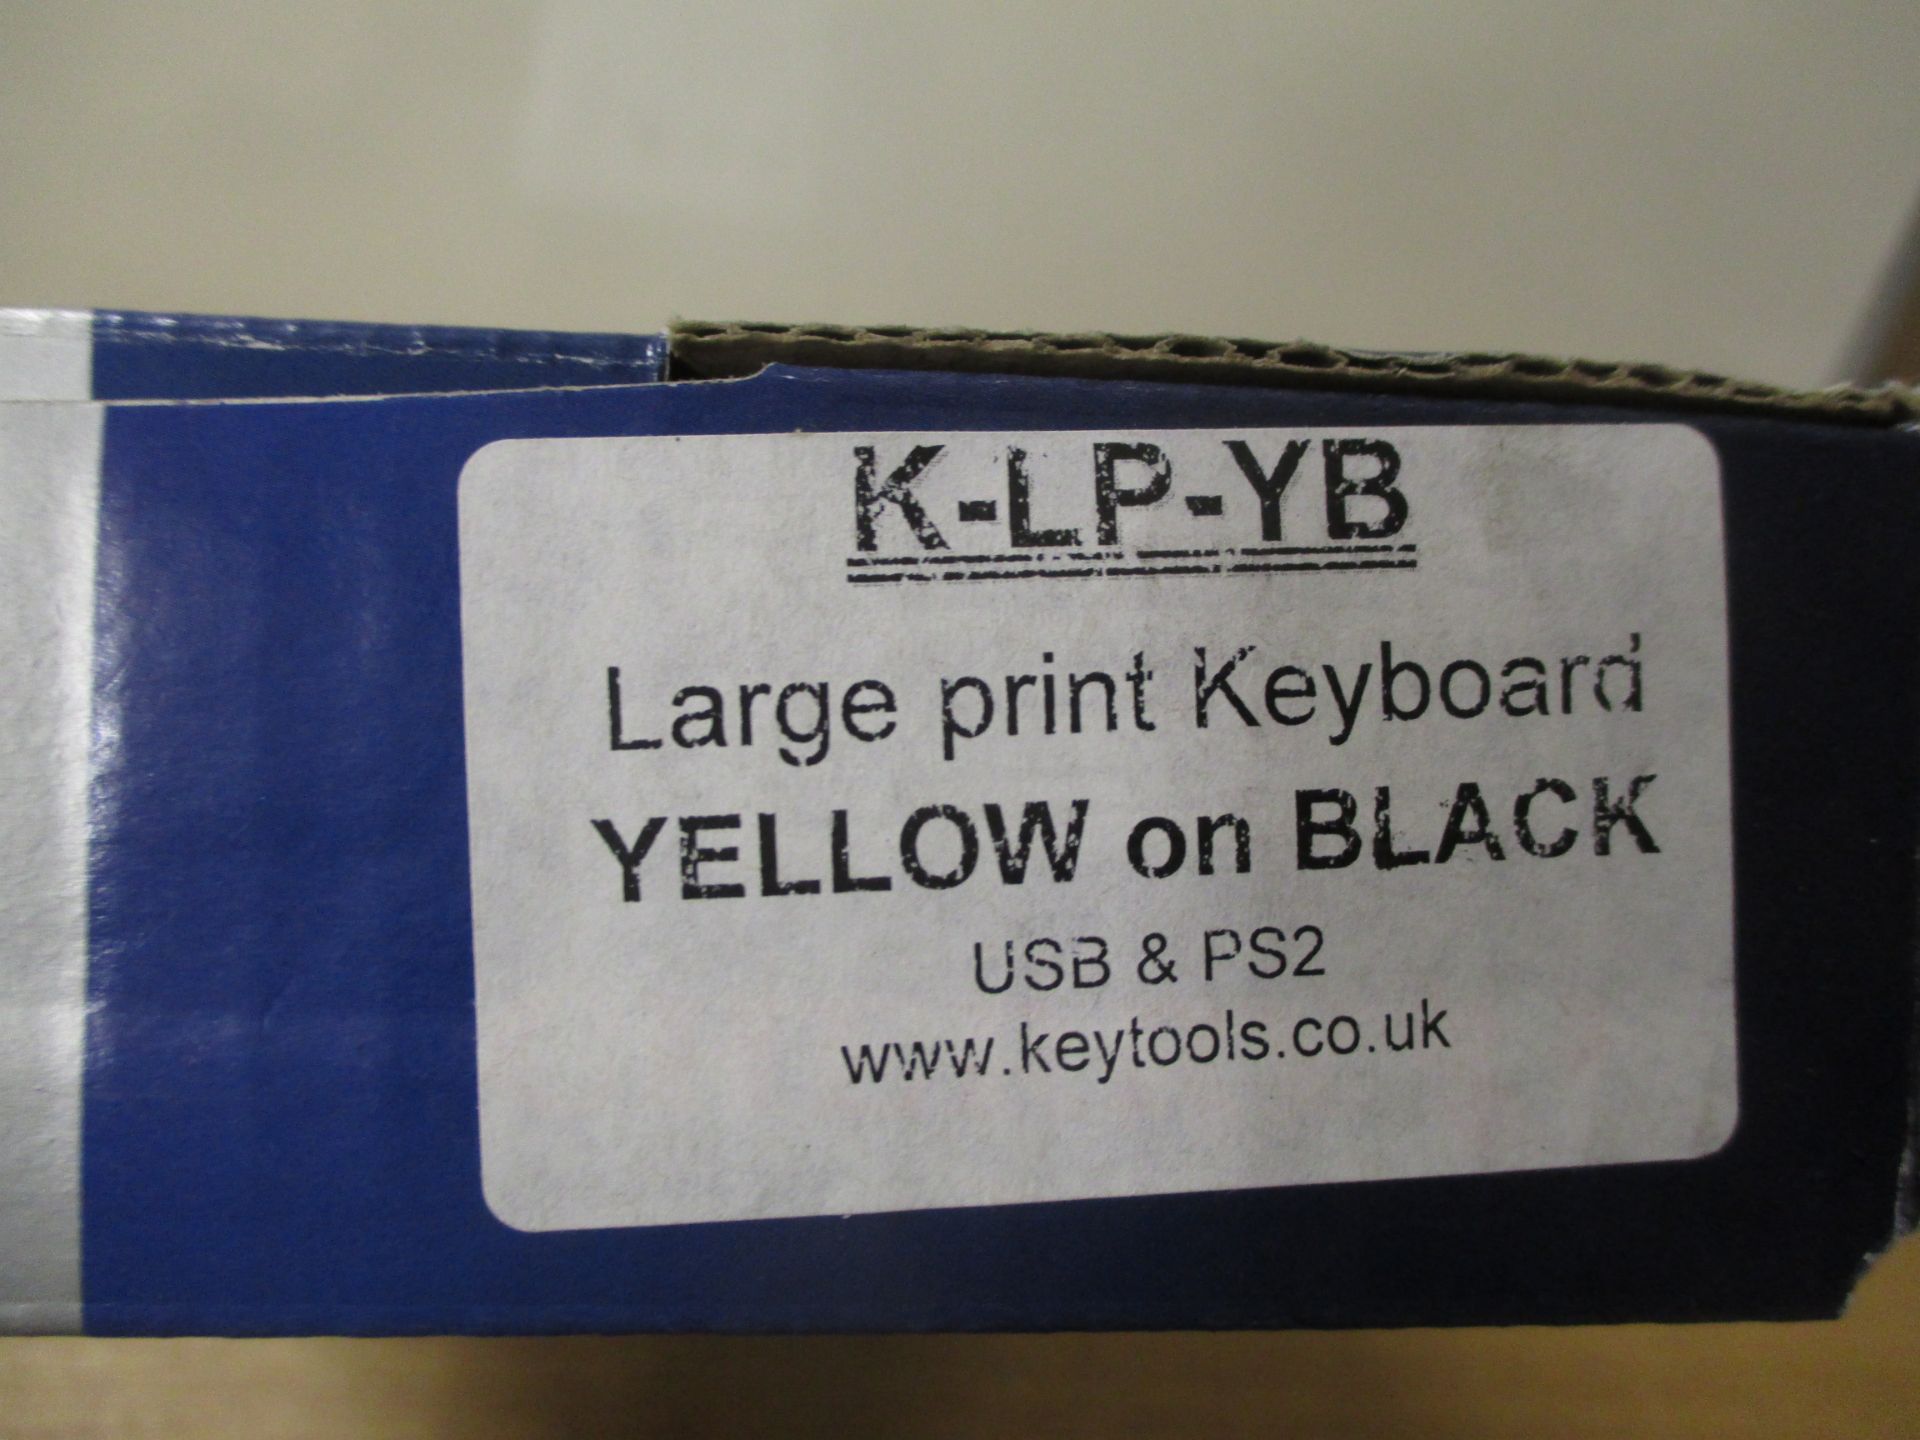 KIDGLOVE LARGE PRINT YELLOW ON BLACK KEYBOARD BY KEYTOOLS. NEW & BOXED. K-LP-YB. USB & PS2 - Image 3 of 3